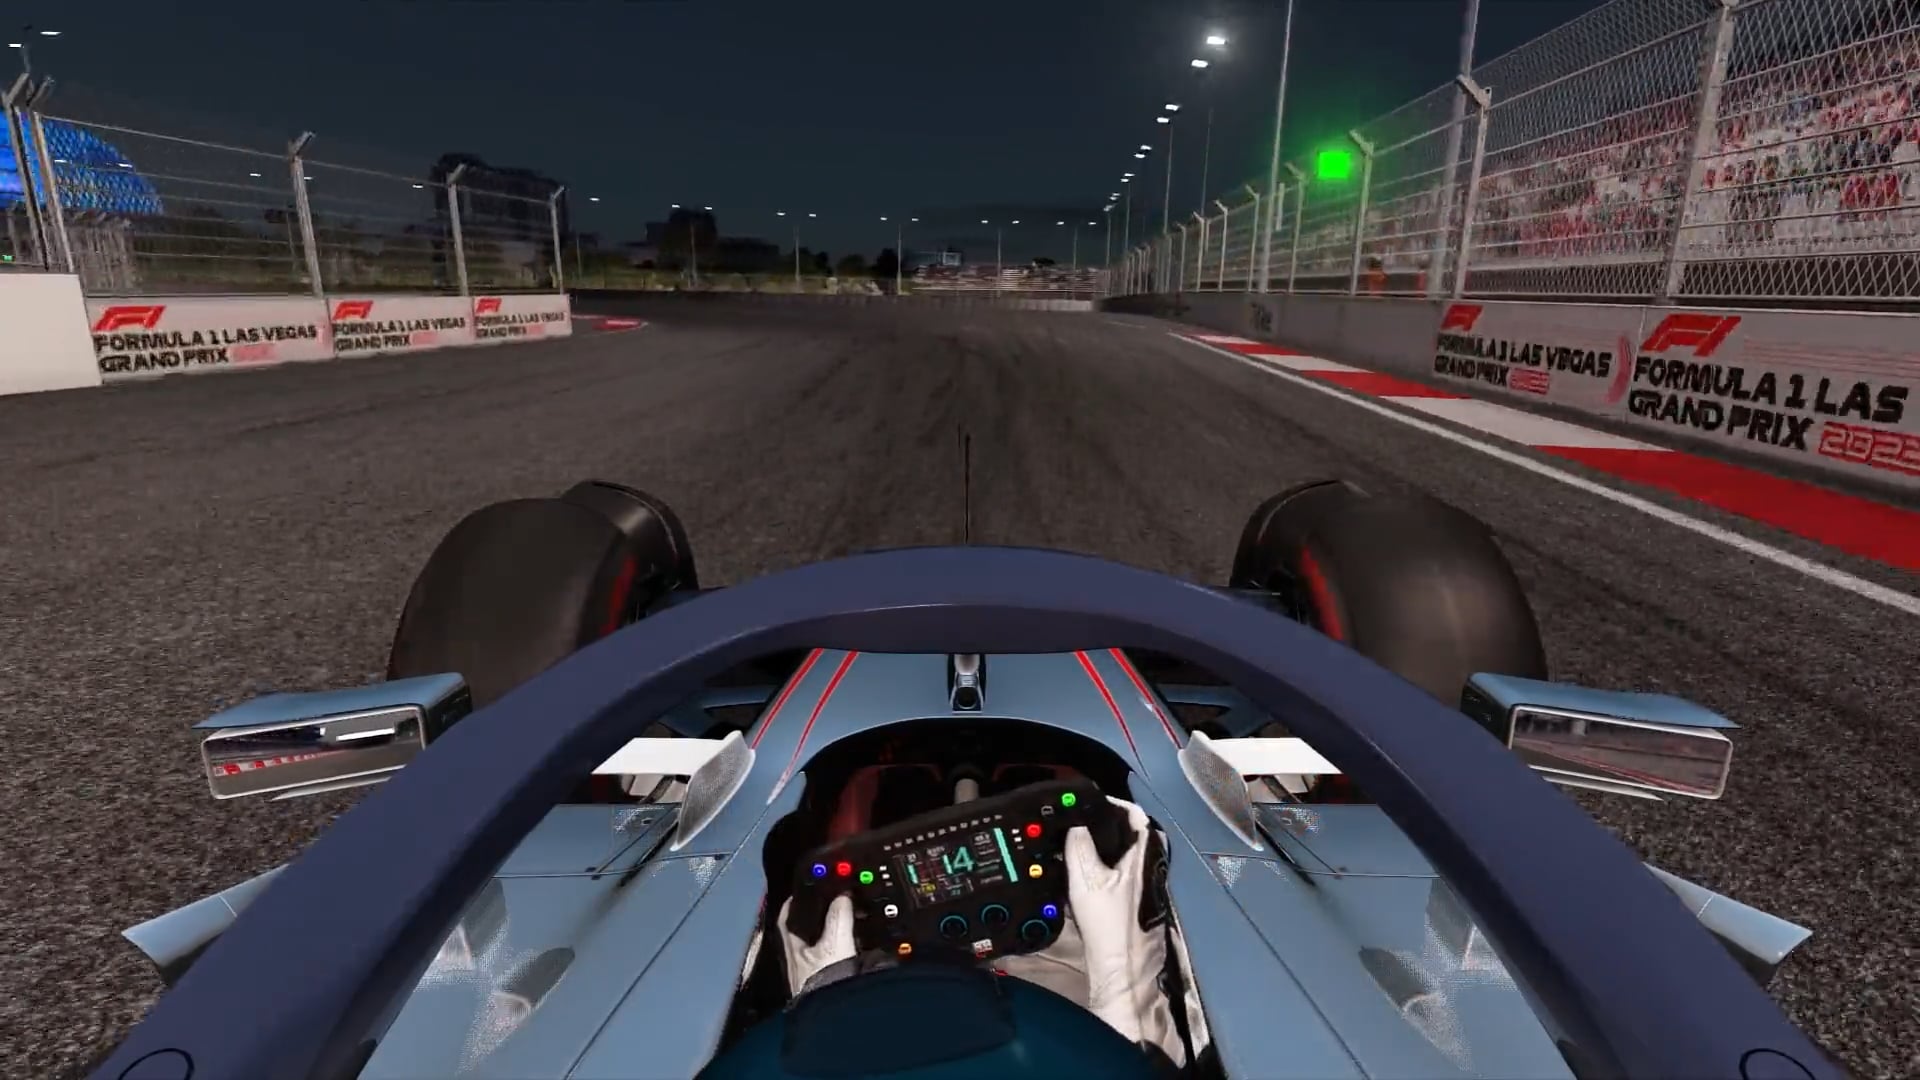 Formula 1 Heineken Silver Las Vegas Grand Prix Simulation on Vimeo